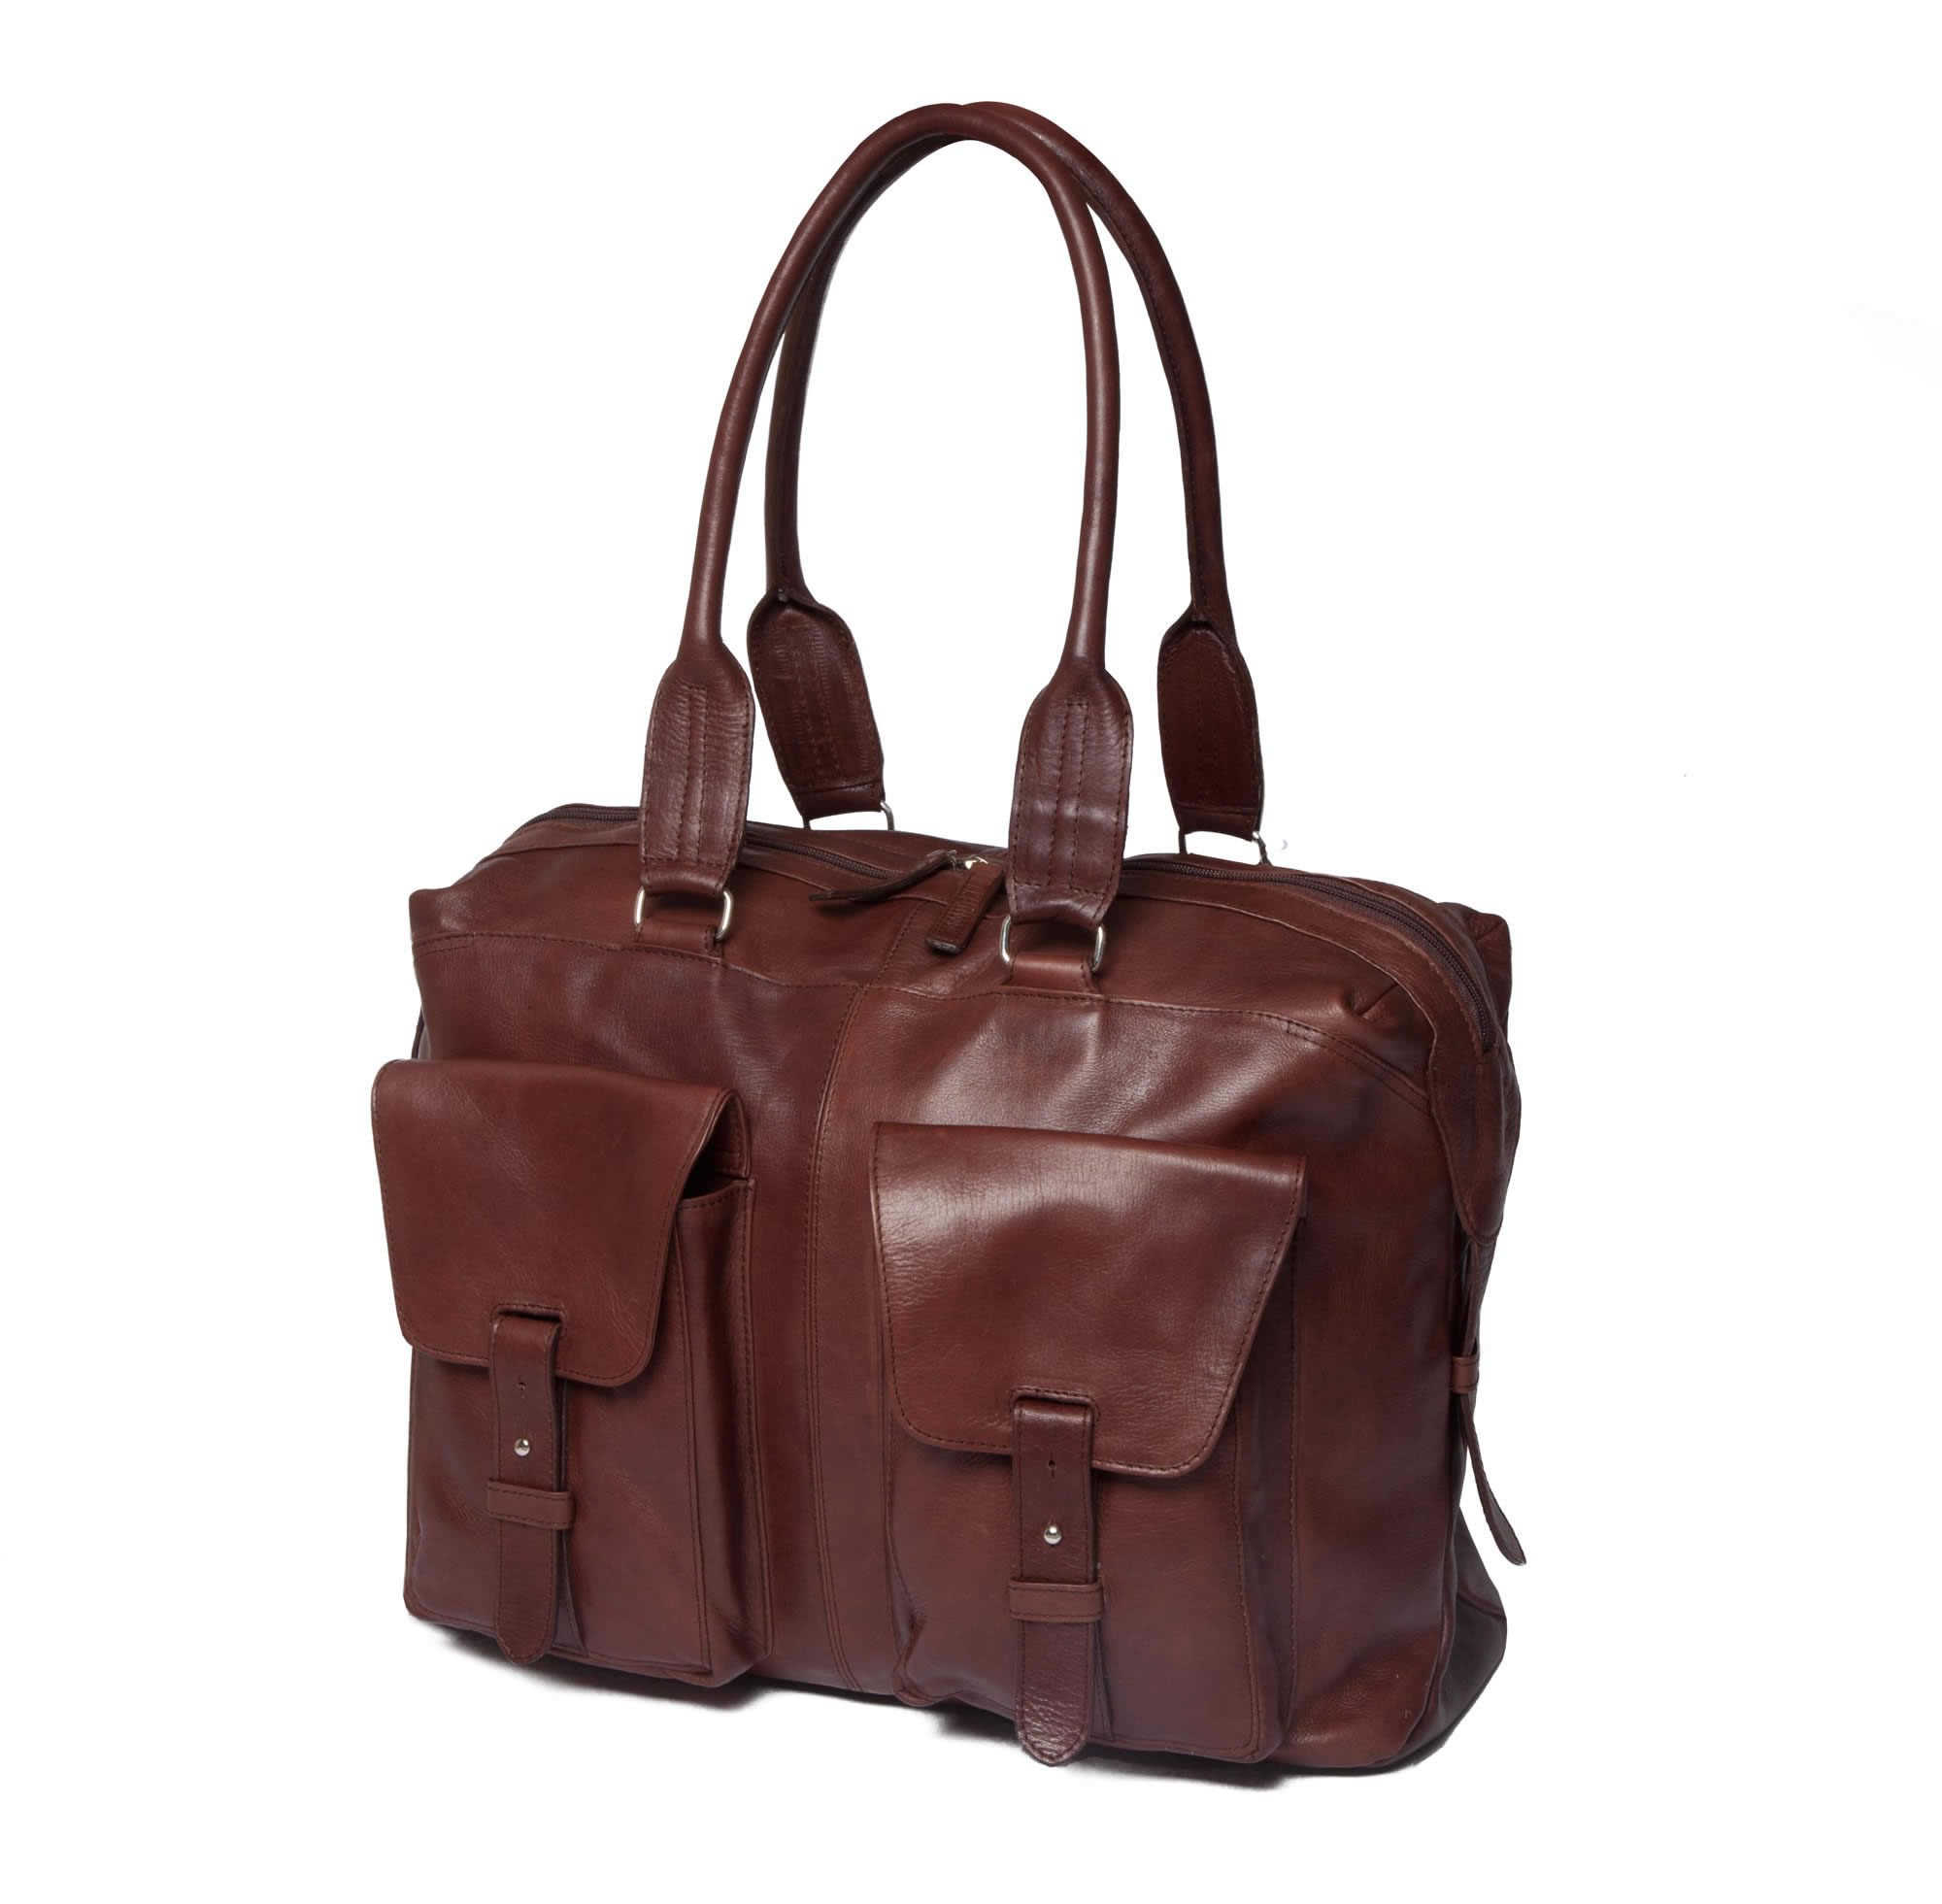 2x SACCOO Soft Brown Leather WEEKEND TRAVEL BAGS 2077-2 | eBay